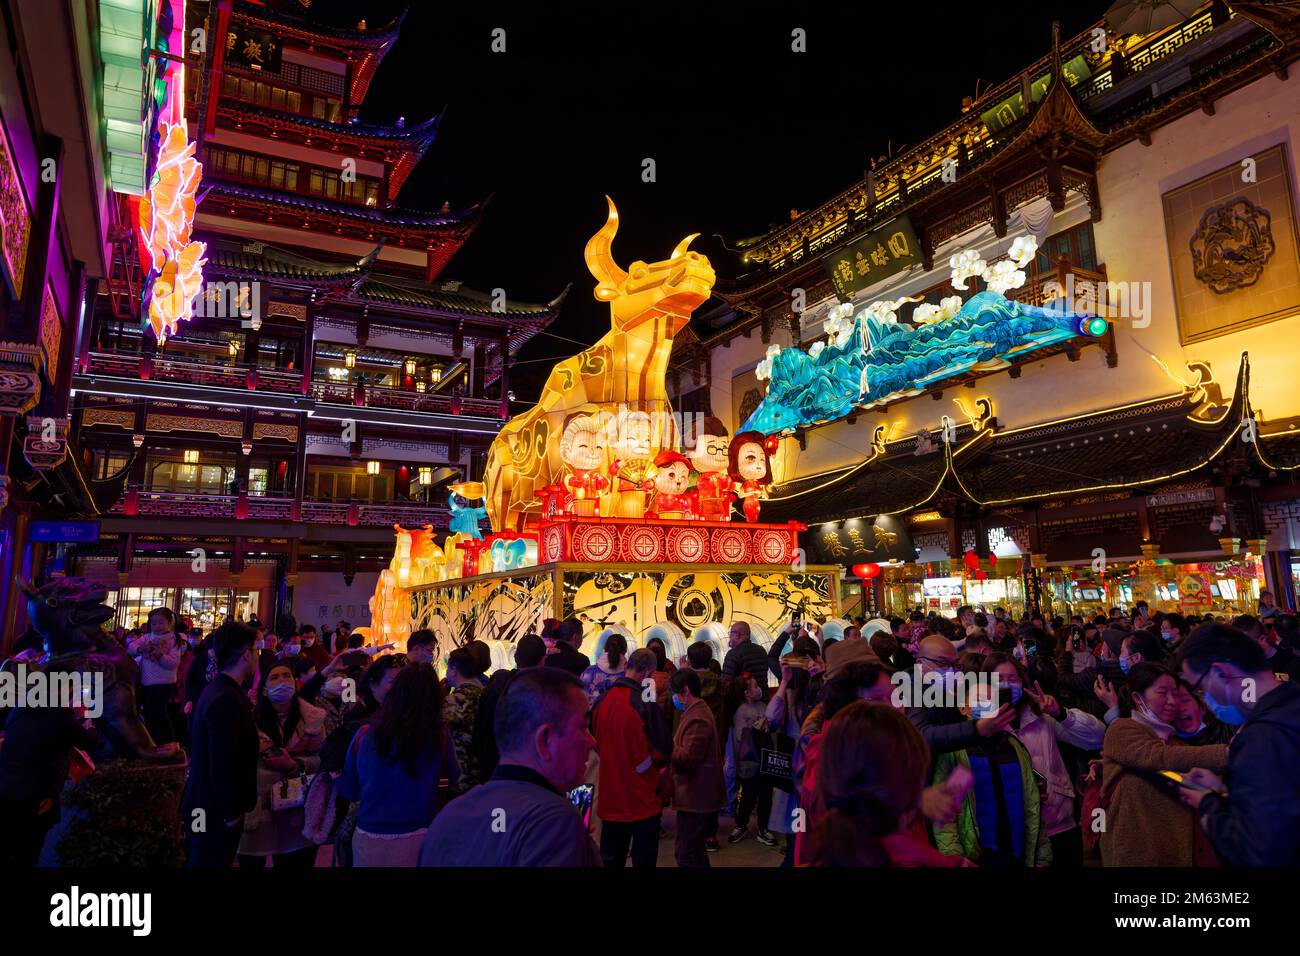 People enjoying the illuminated surroundings in Yuyuang Bazaar in Shanghai during Chinese New Year. Stock Photo